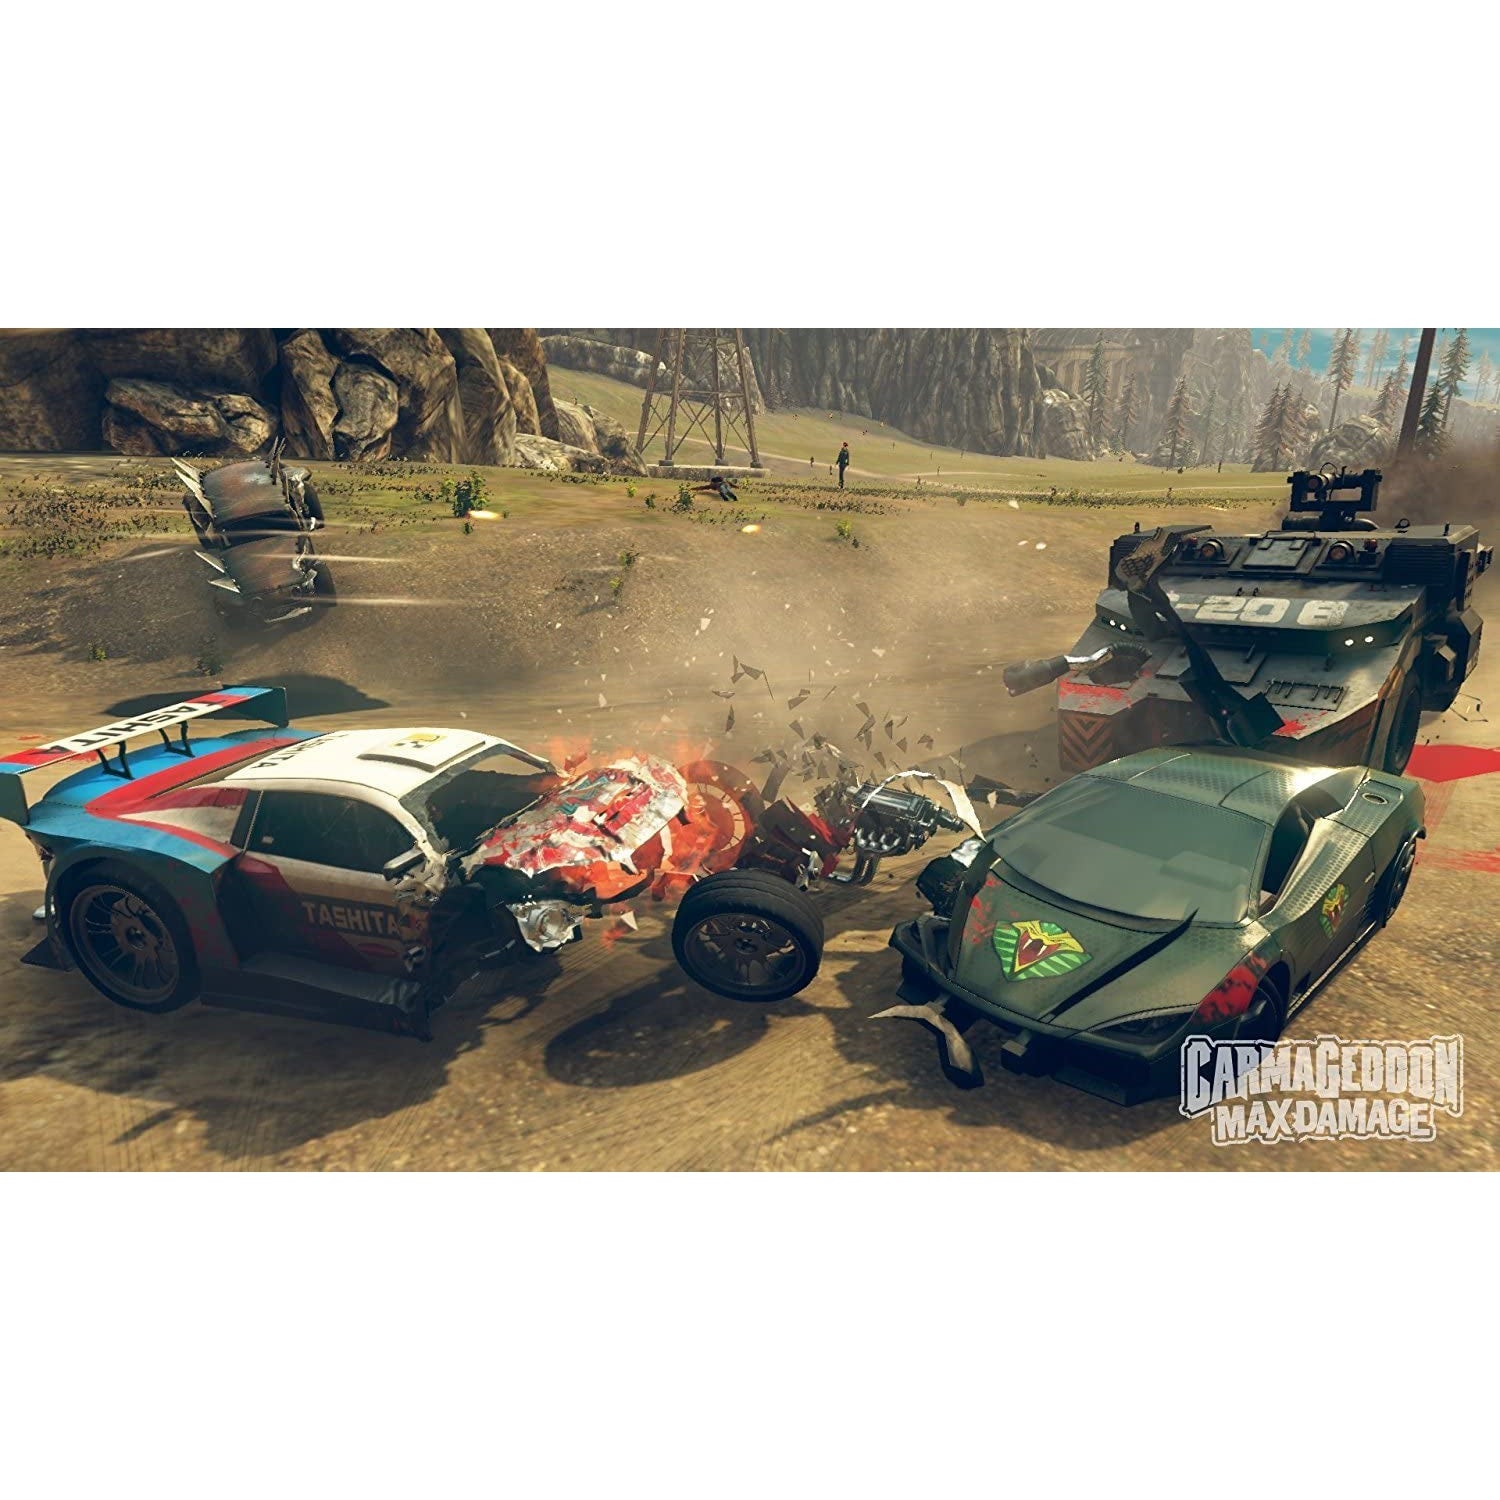 Carmageddon: Max Damage (Xbox One)